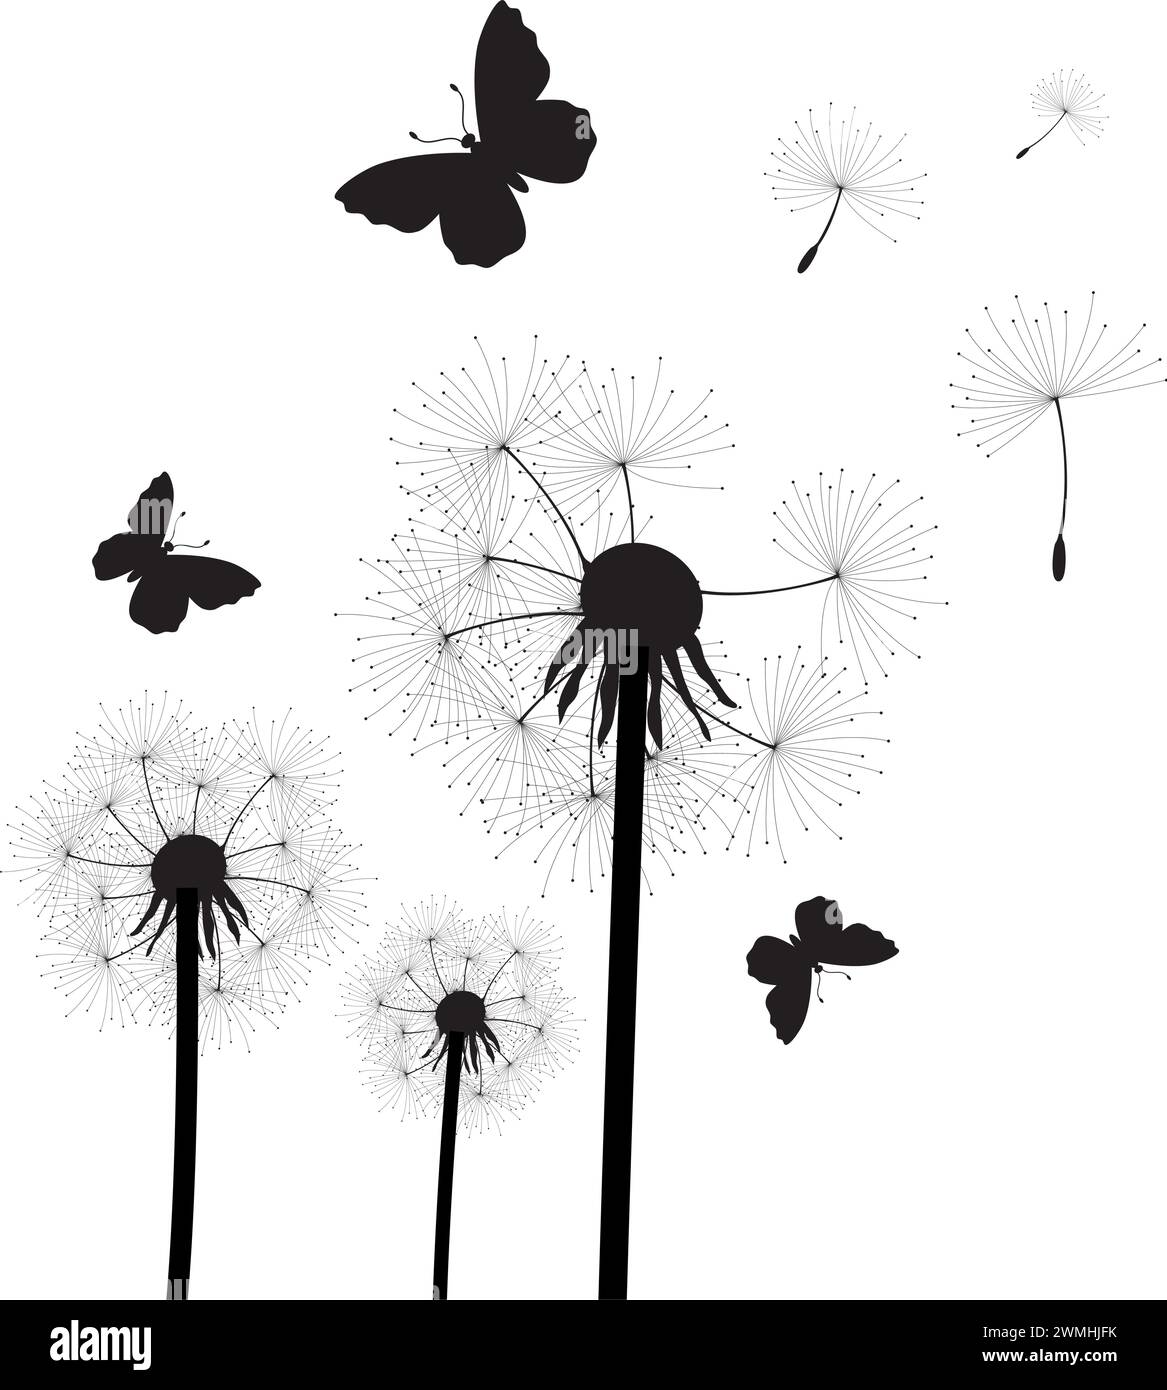 vector illustration of dandelion seeds blown in the wind Stock Vector